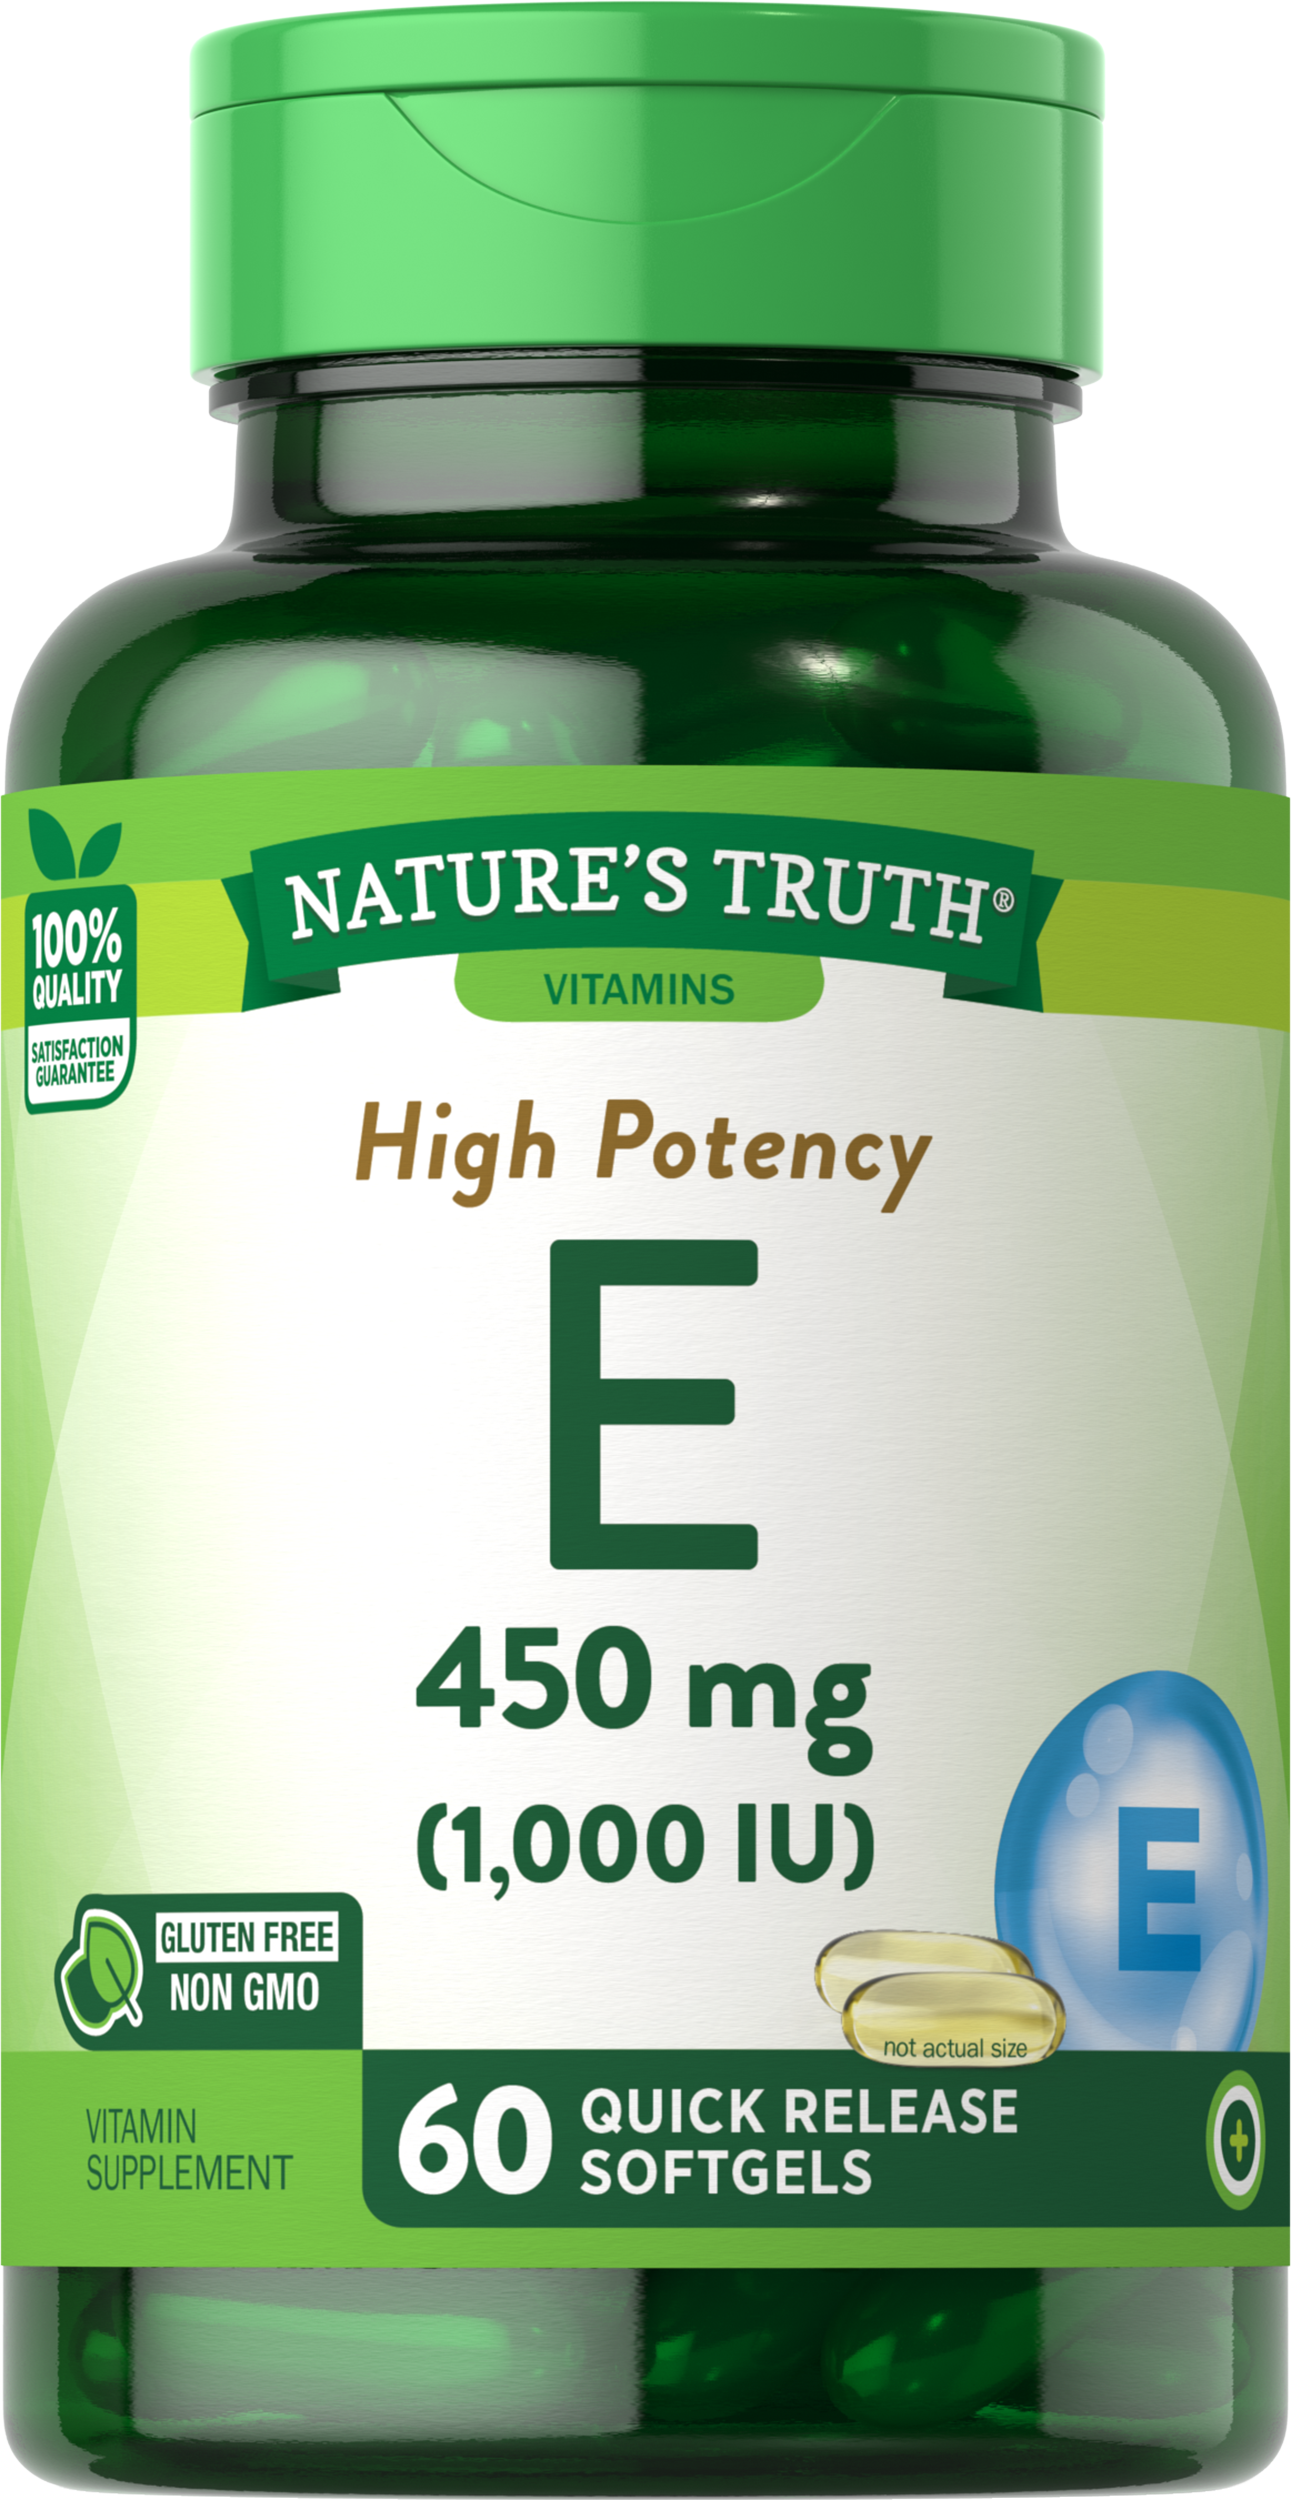 Vitamin E 268 mg (1000 IU)